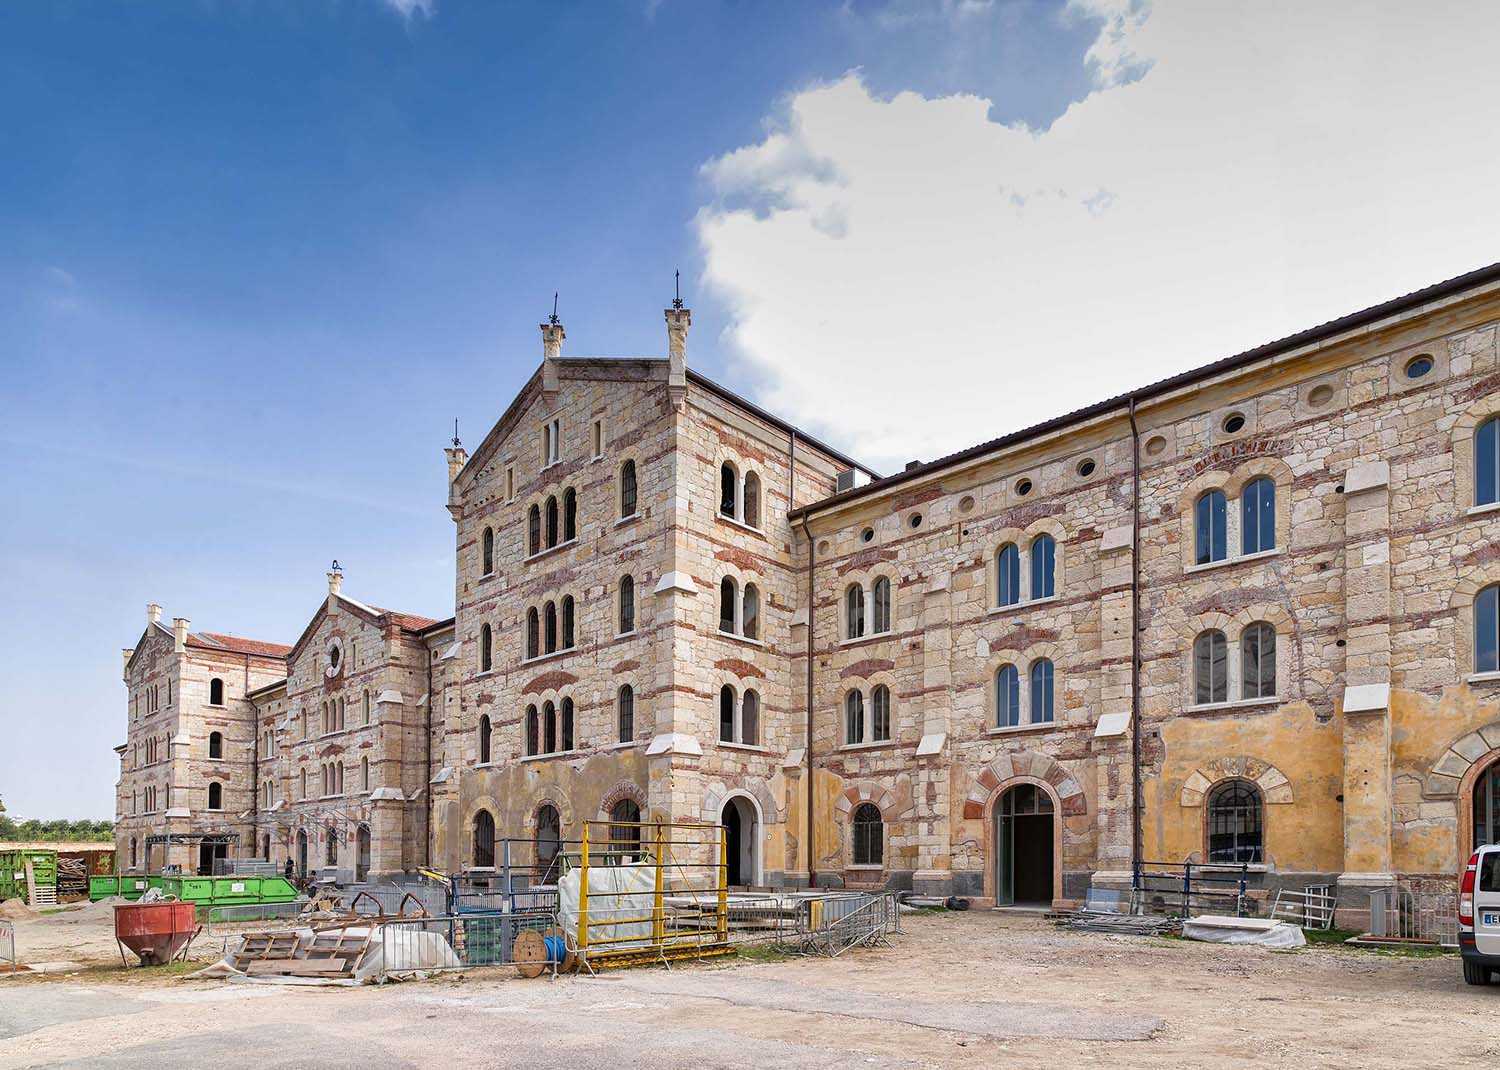 Barracks in Verona recovered